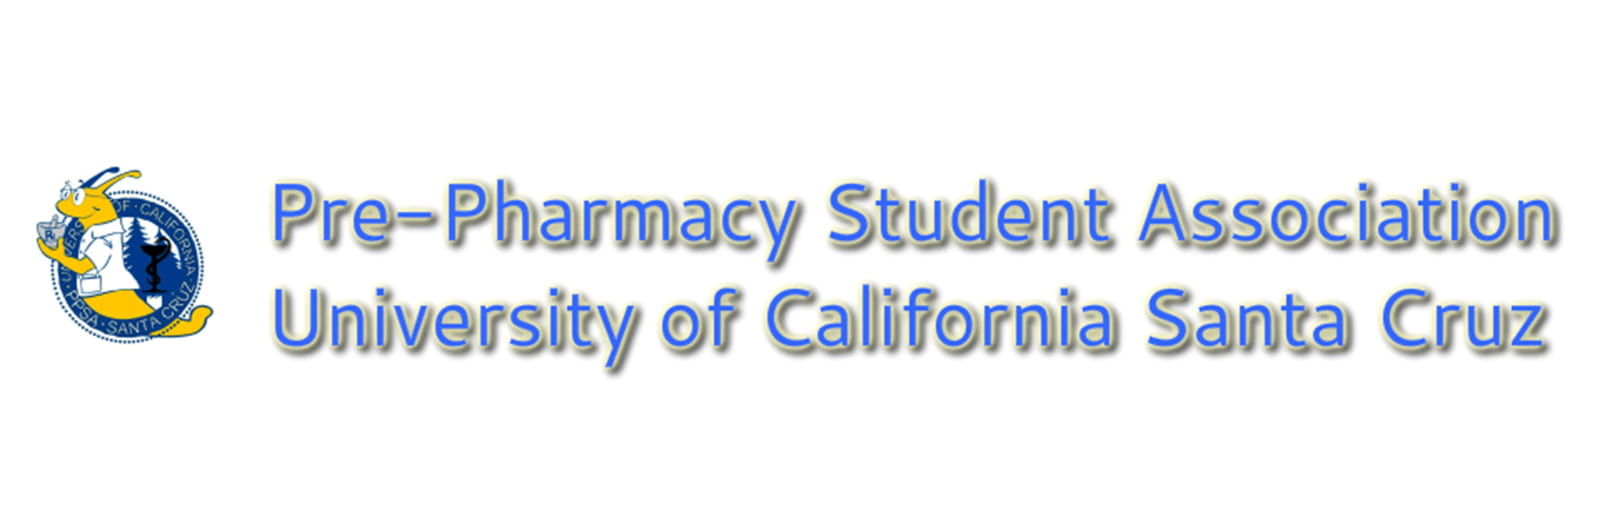 Banner shows a banana slug logo and reads "Pre-Pharmacy Student Association, University of California, Santa Cruz."